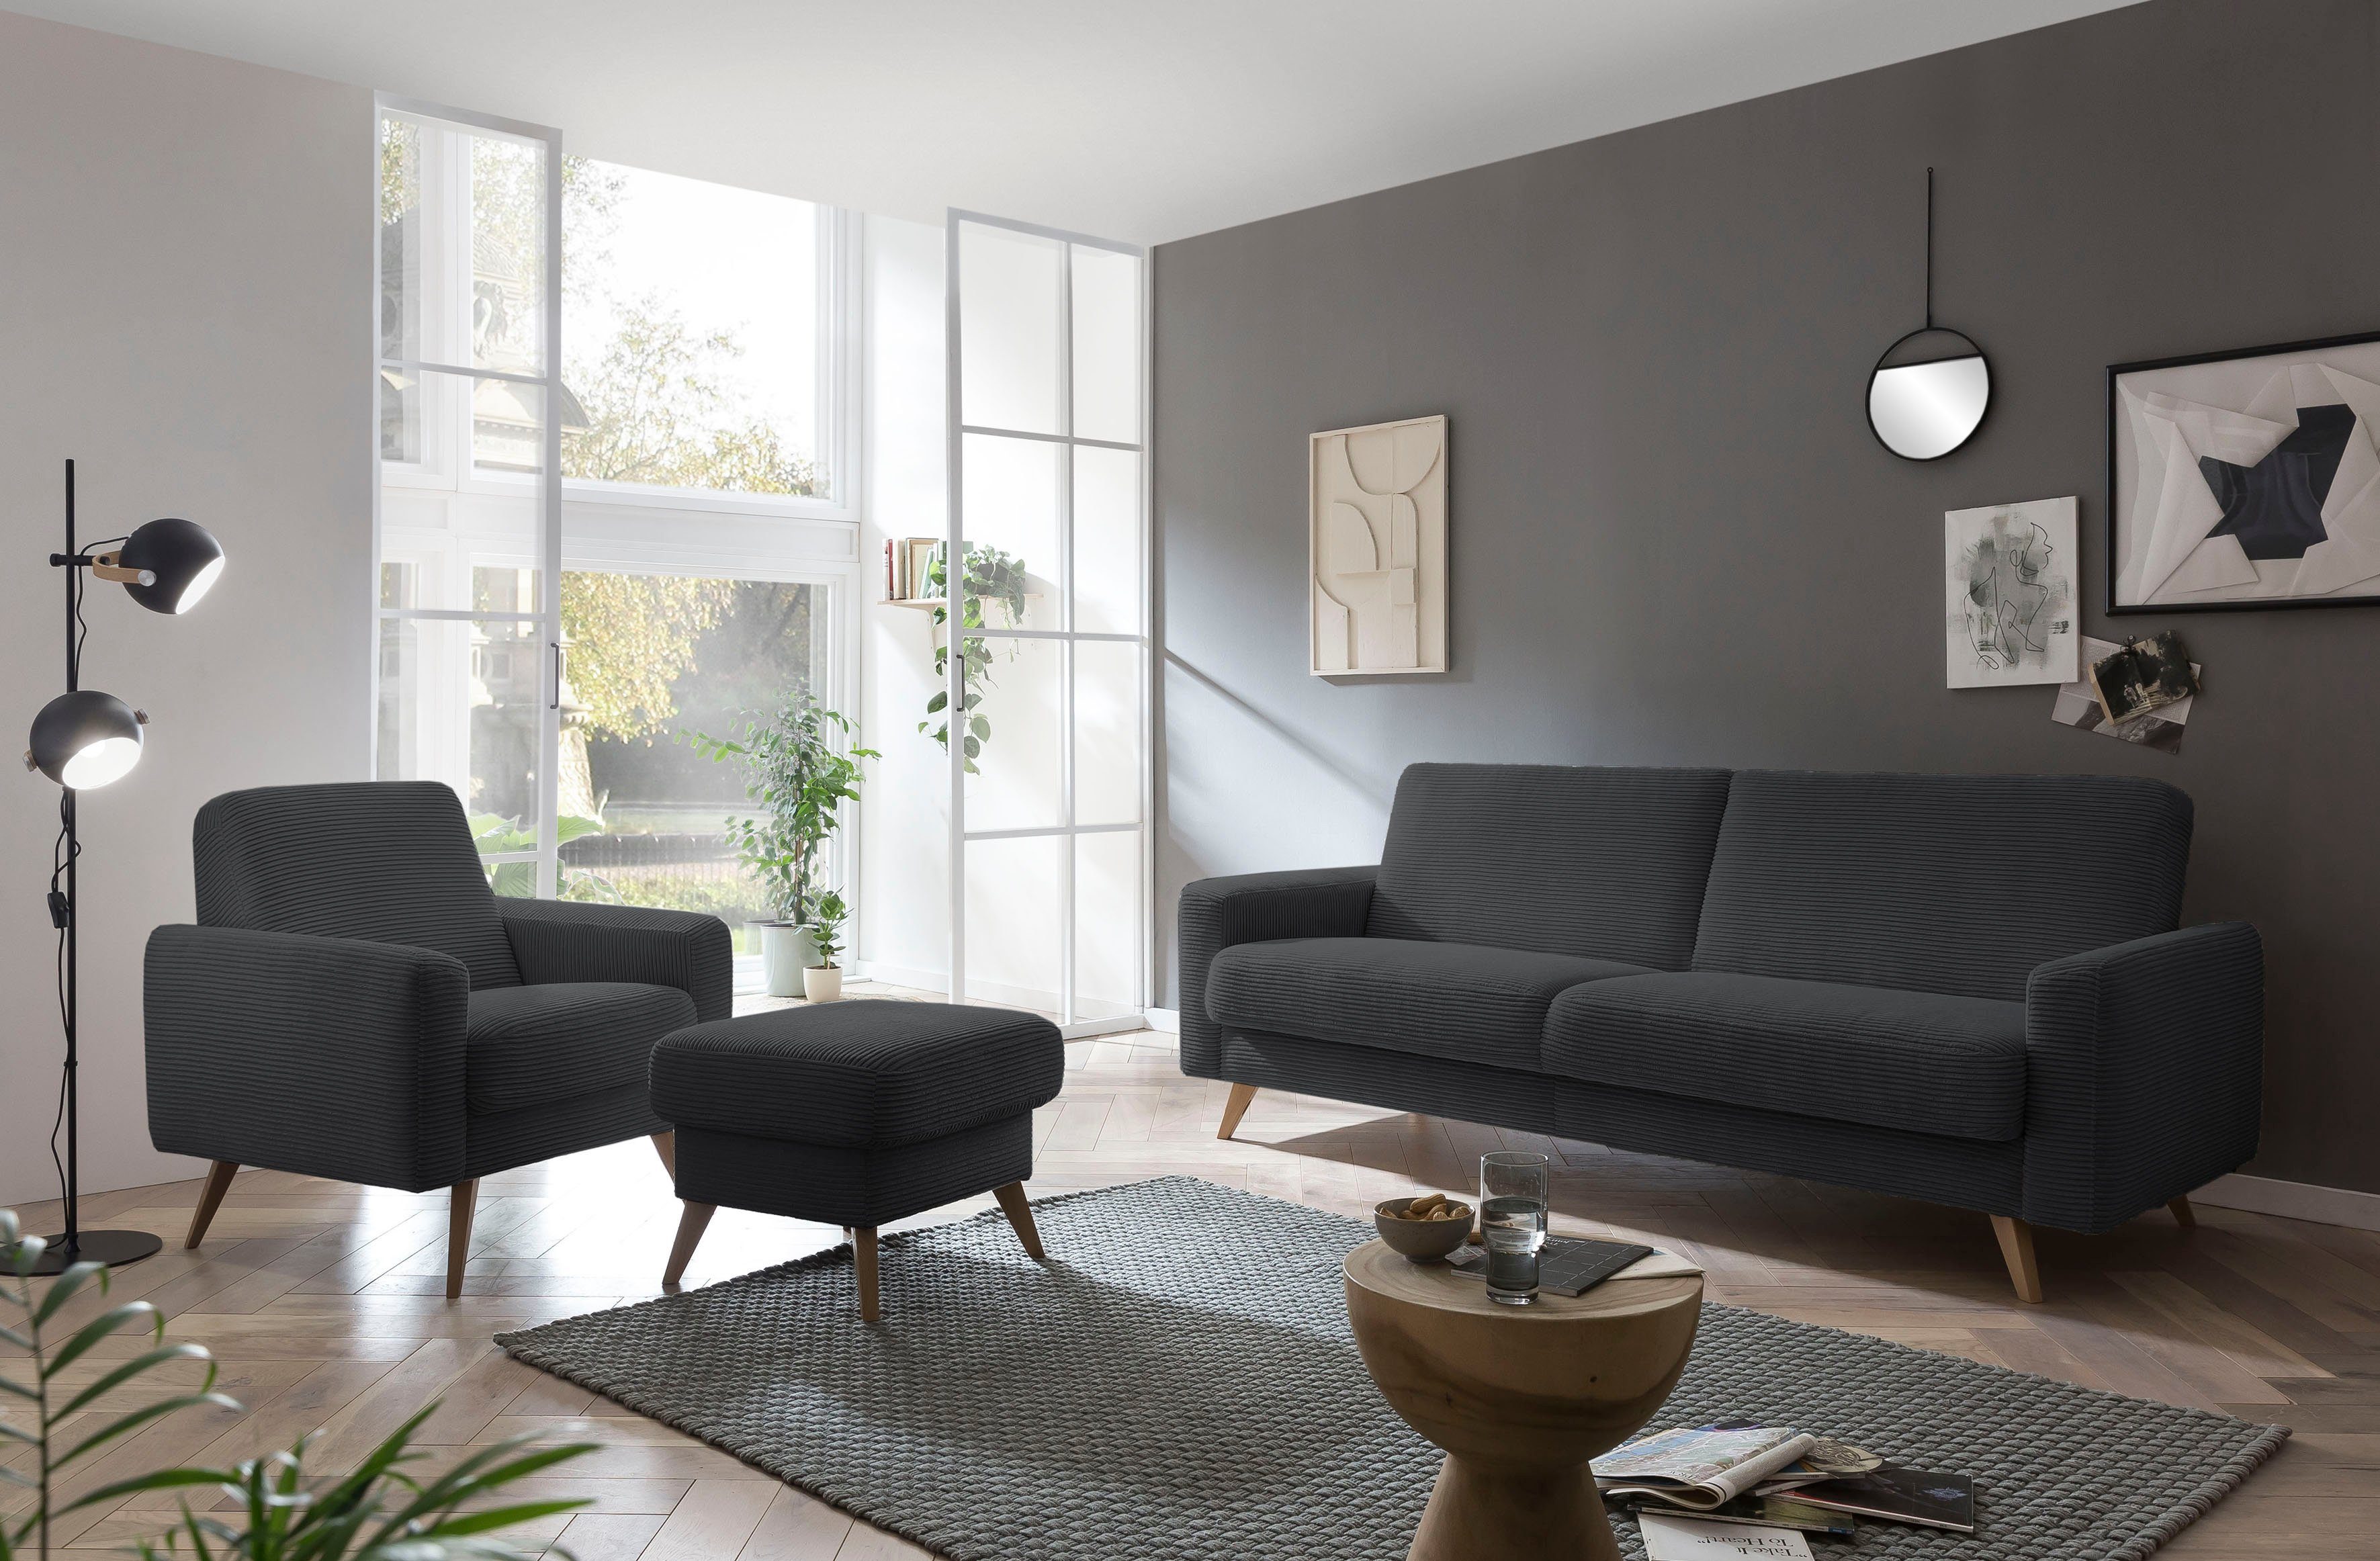 Samso, Bettkasten Bettfunktion exxpo sofa Inklusive fashion 3-Sitzer und antrazith -